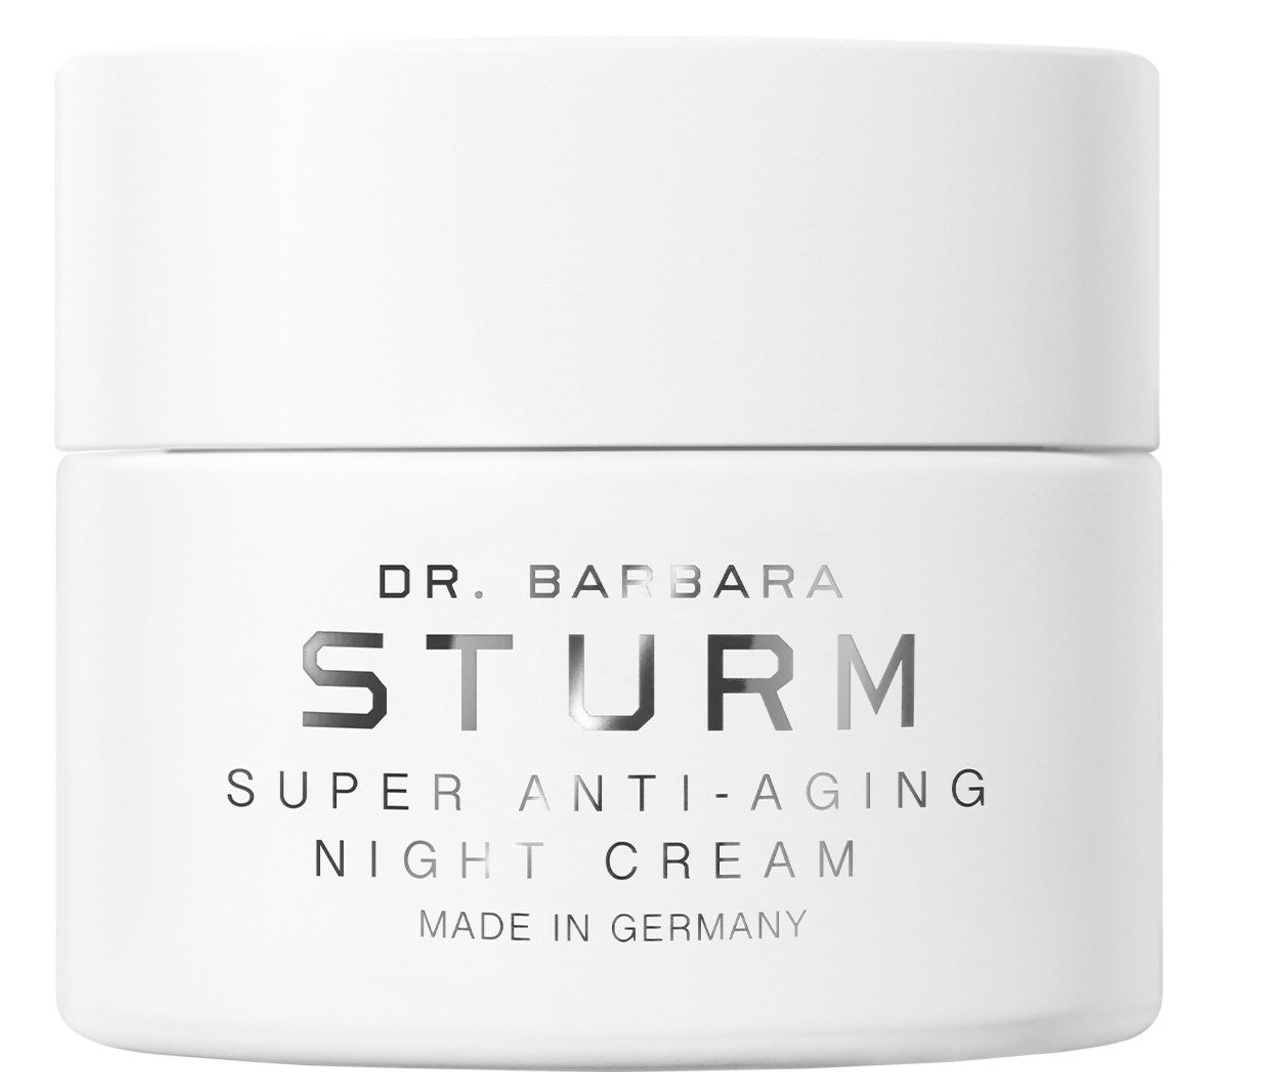 Dr. Barbara Stürm Super Anti-aging Night Cream